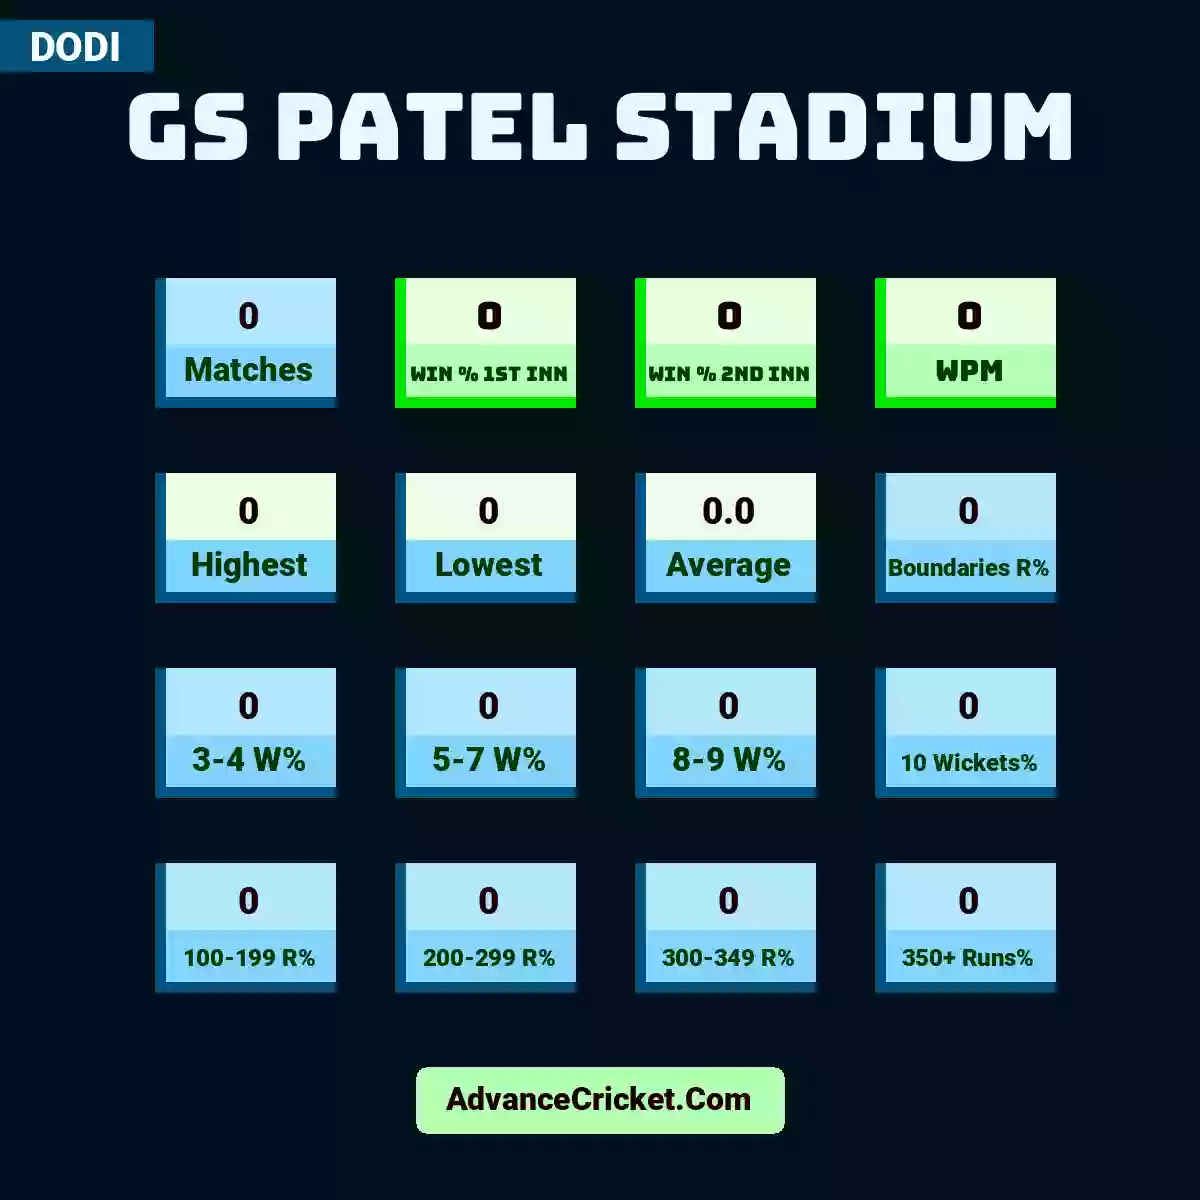 Image showing GS Patel Stadium with Matches: 0, Win % 1st Inn: 0, Win % 2nd Inn: 0, WPM: 0, Highest: 0, Lowest: 0, Average: 0.0, Boundaries R%: 0, 3-4 W%: 0, 5-7 W%: 0, 8-9 W%: 0, 10 Wickets%: 0, 100-199 R%: 0, 200-299 R%: 0, 300-349 R%: 0, 350+ Runs%: 0.